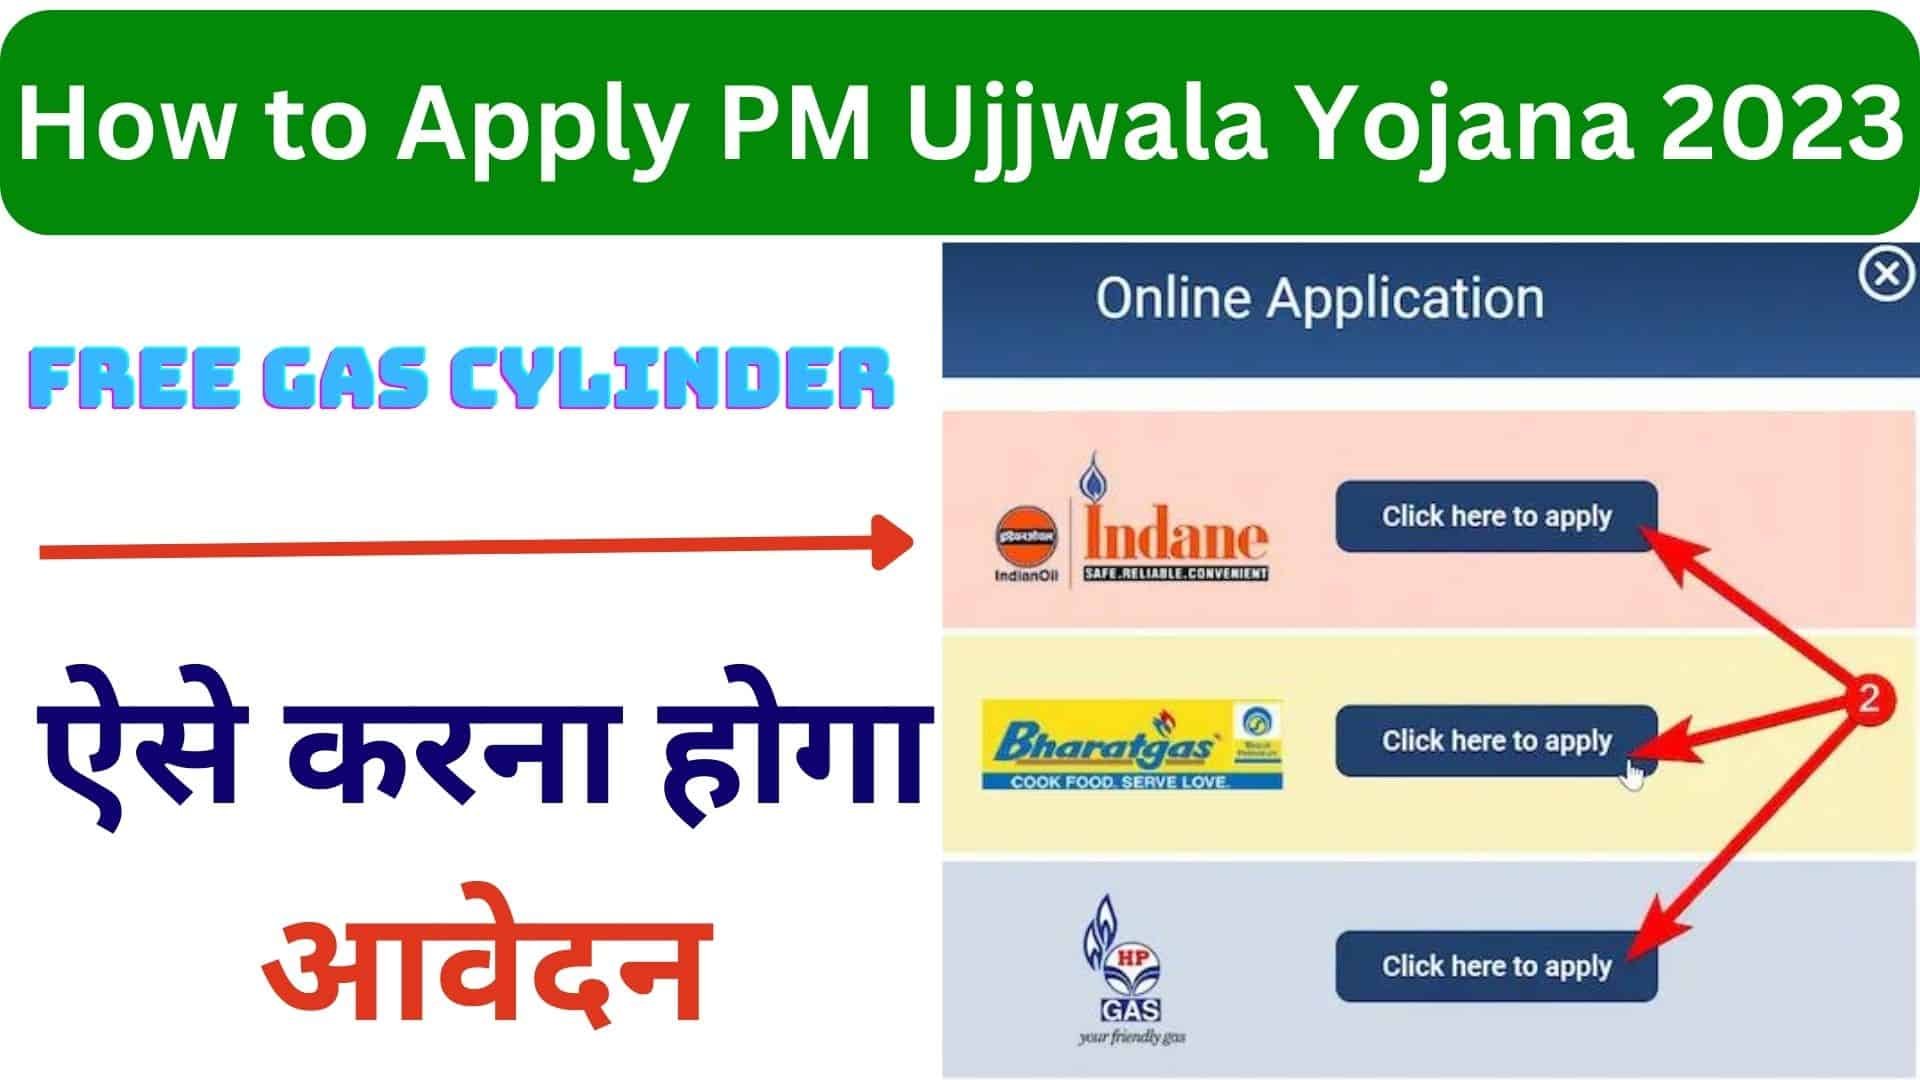 How to Apply PM Ujjwala Yojana 2023 Free Gas Cylinder